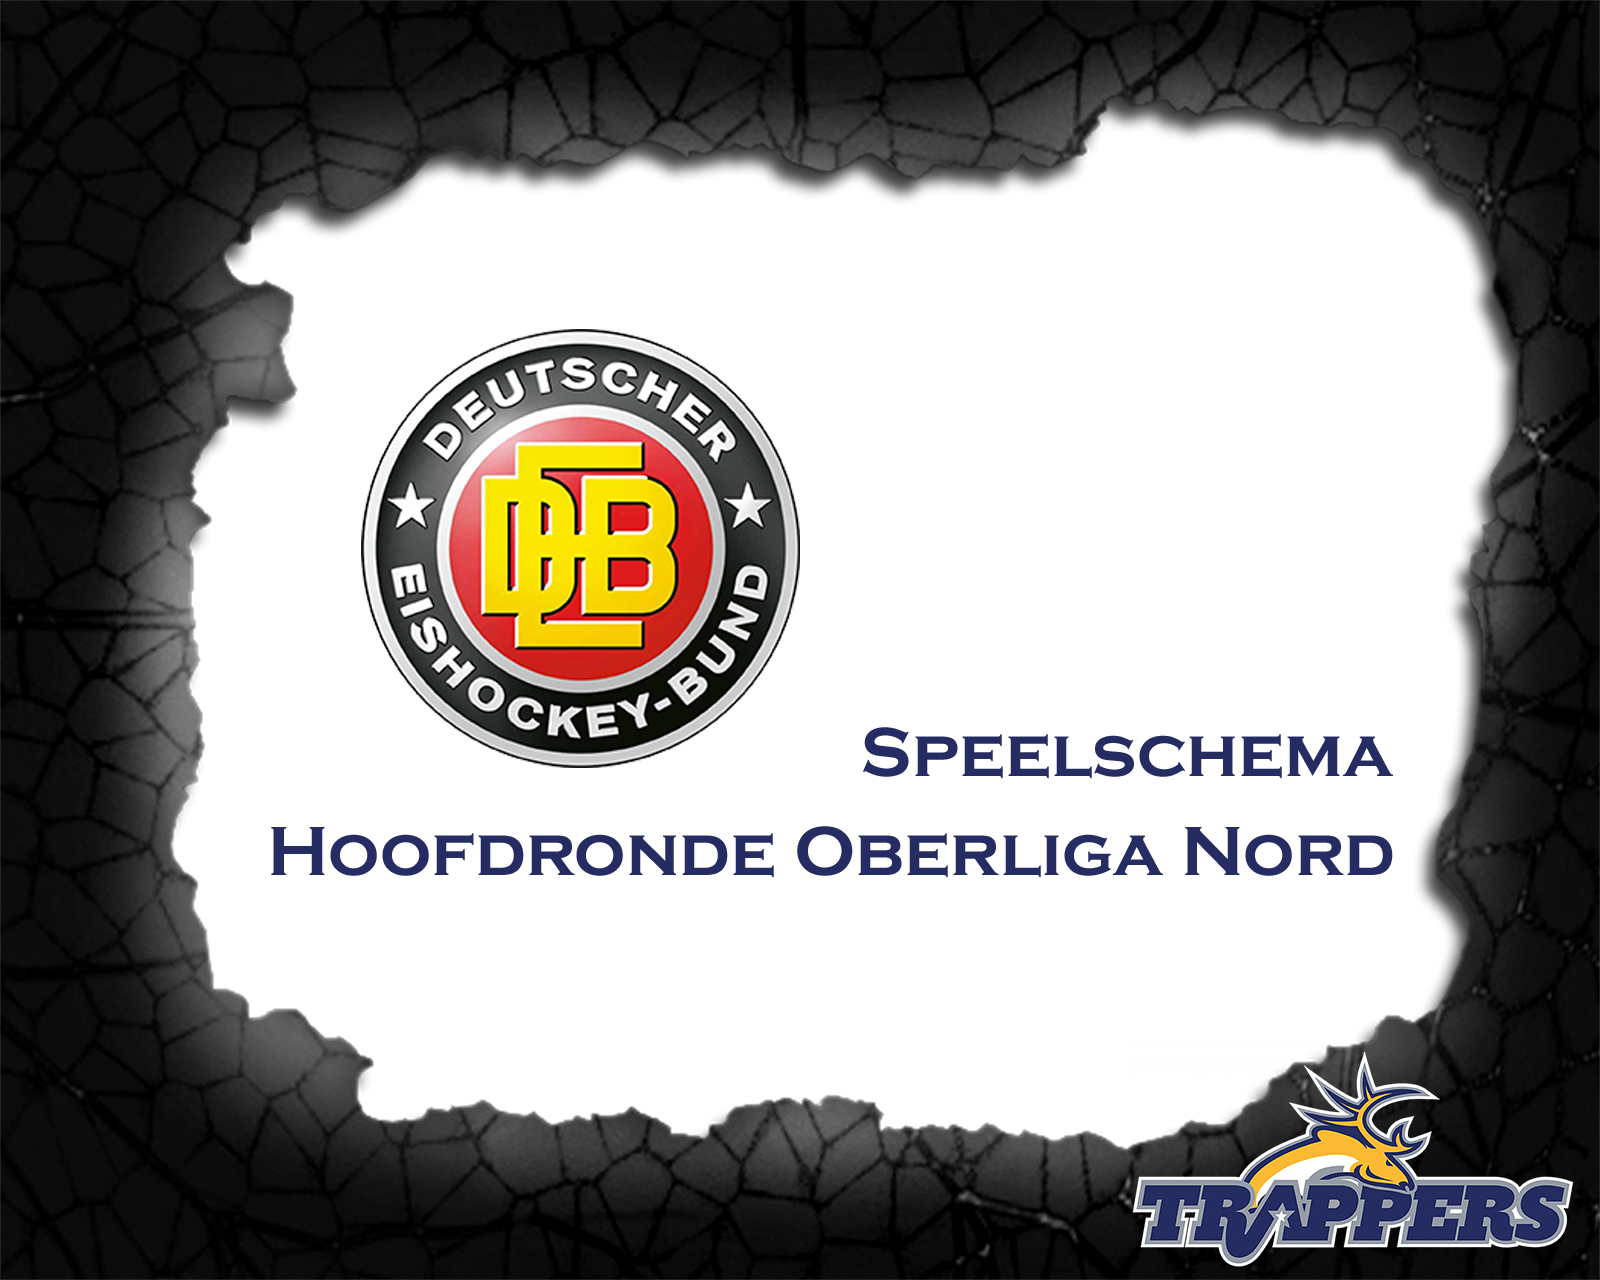 Speelschema Hoofdronde Oberliga Nord bekend